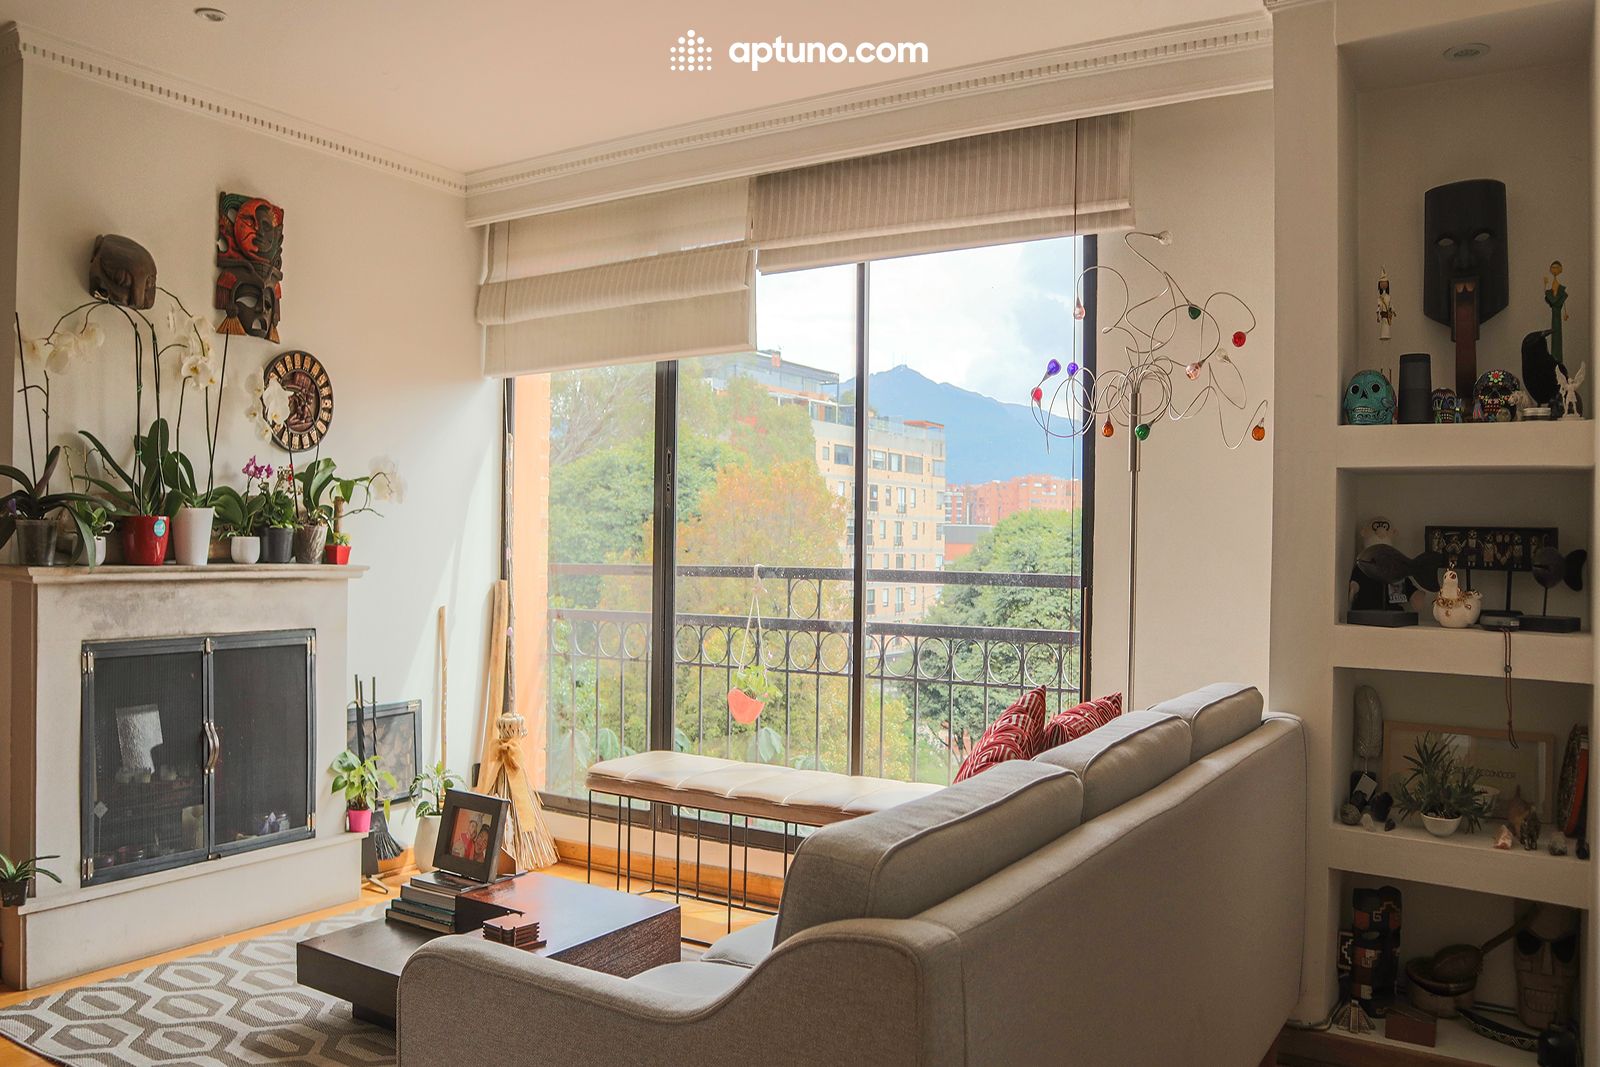 Apartamento en arriendo Lisboa 110 m² - $ 3.000.000